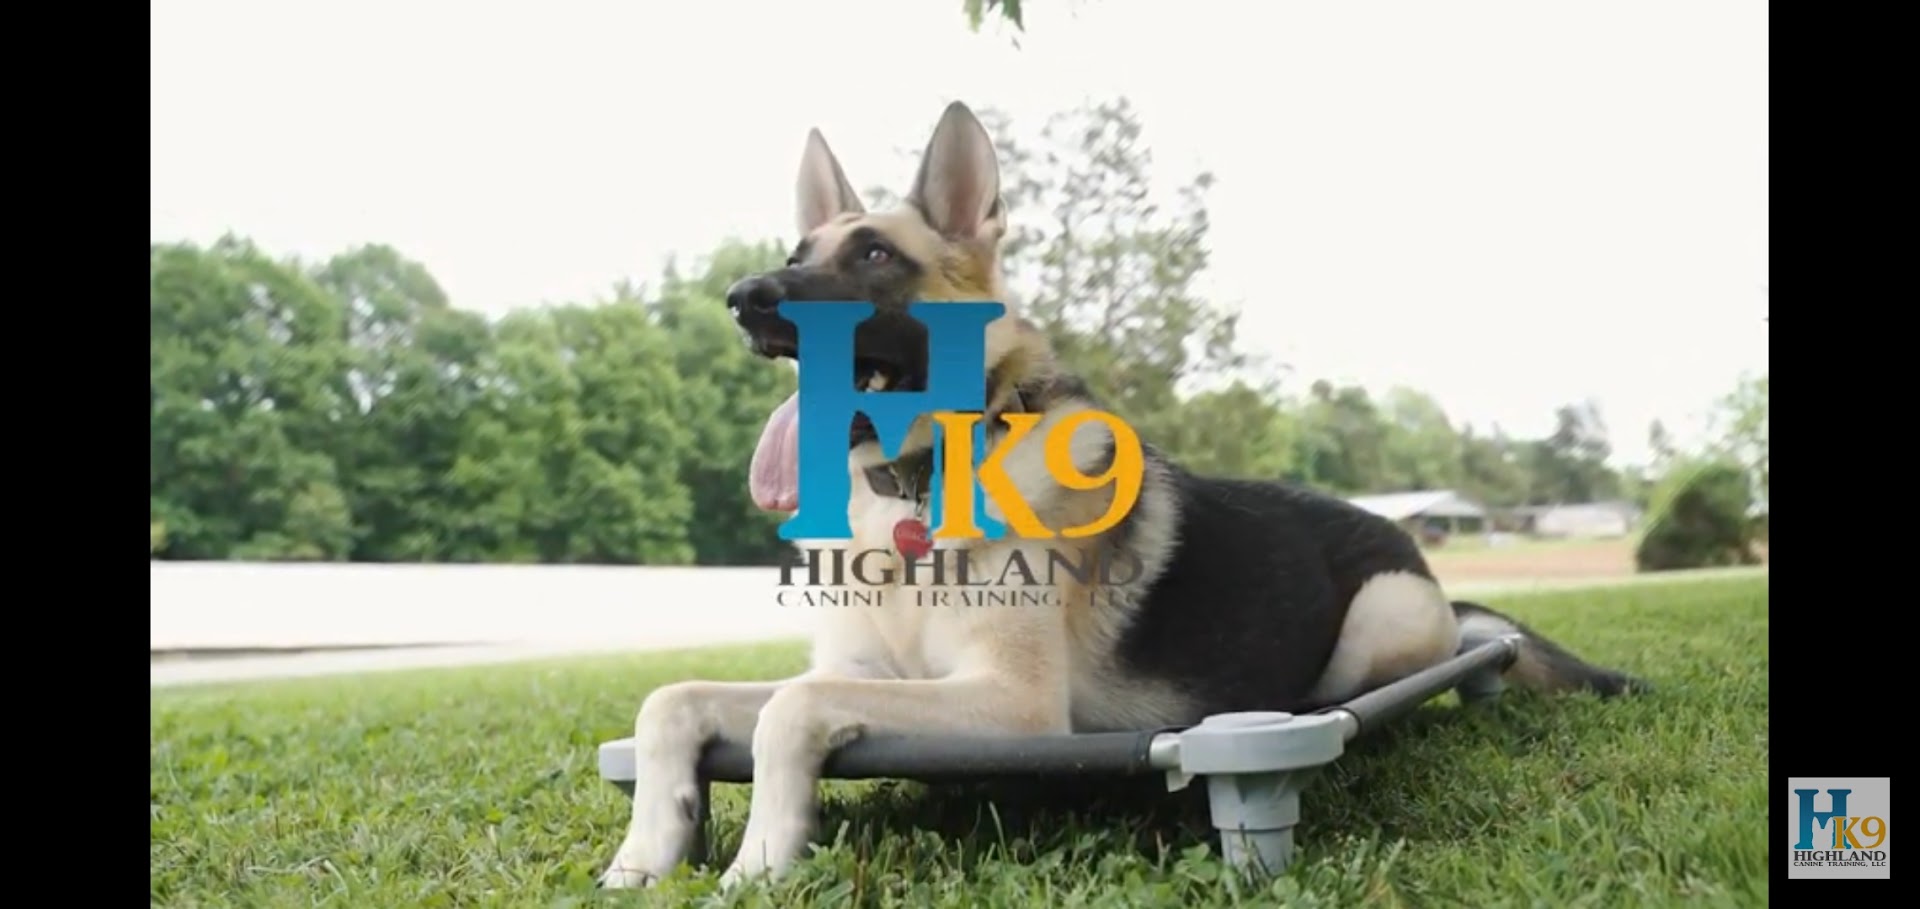 Highland Canine Training - Scranton